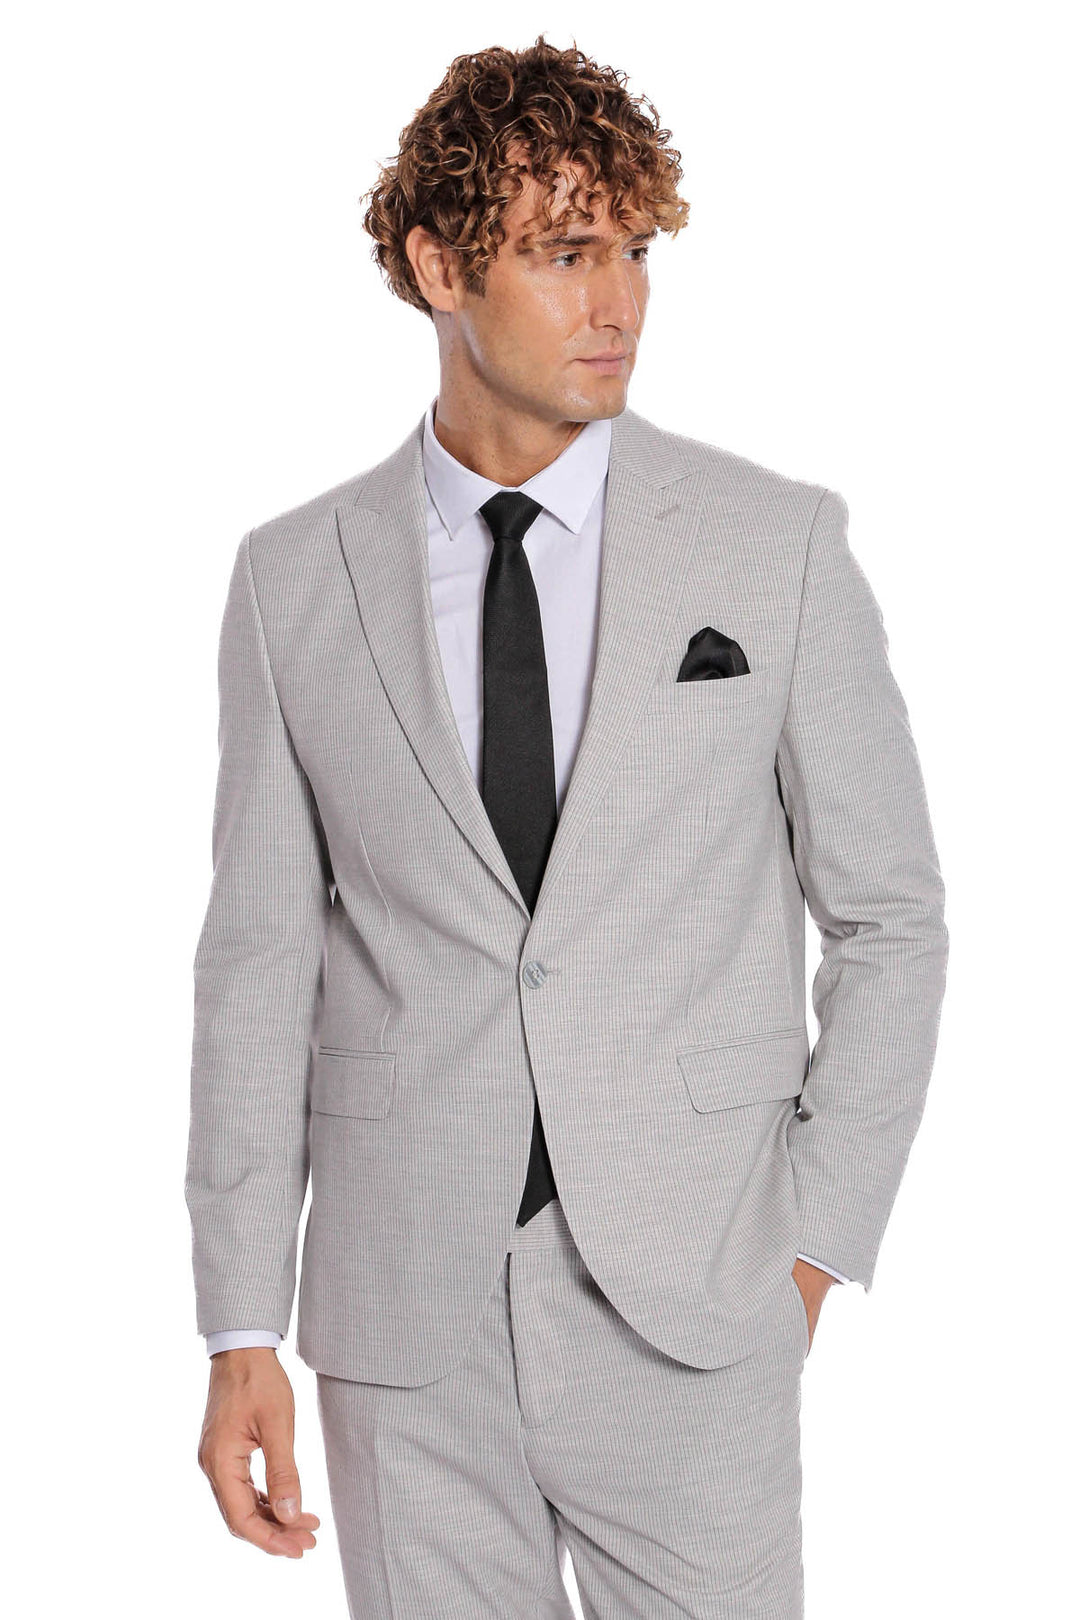 Men's Classic Fit Grey Pinstripe 2-Piece Suit (Jacket and Pants